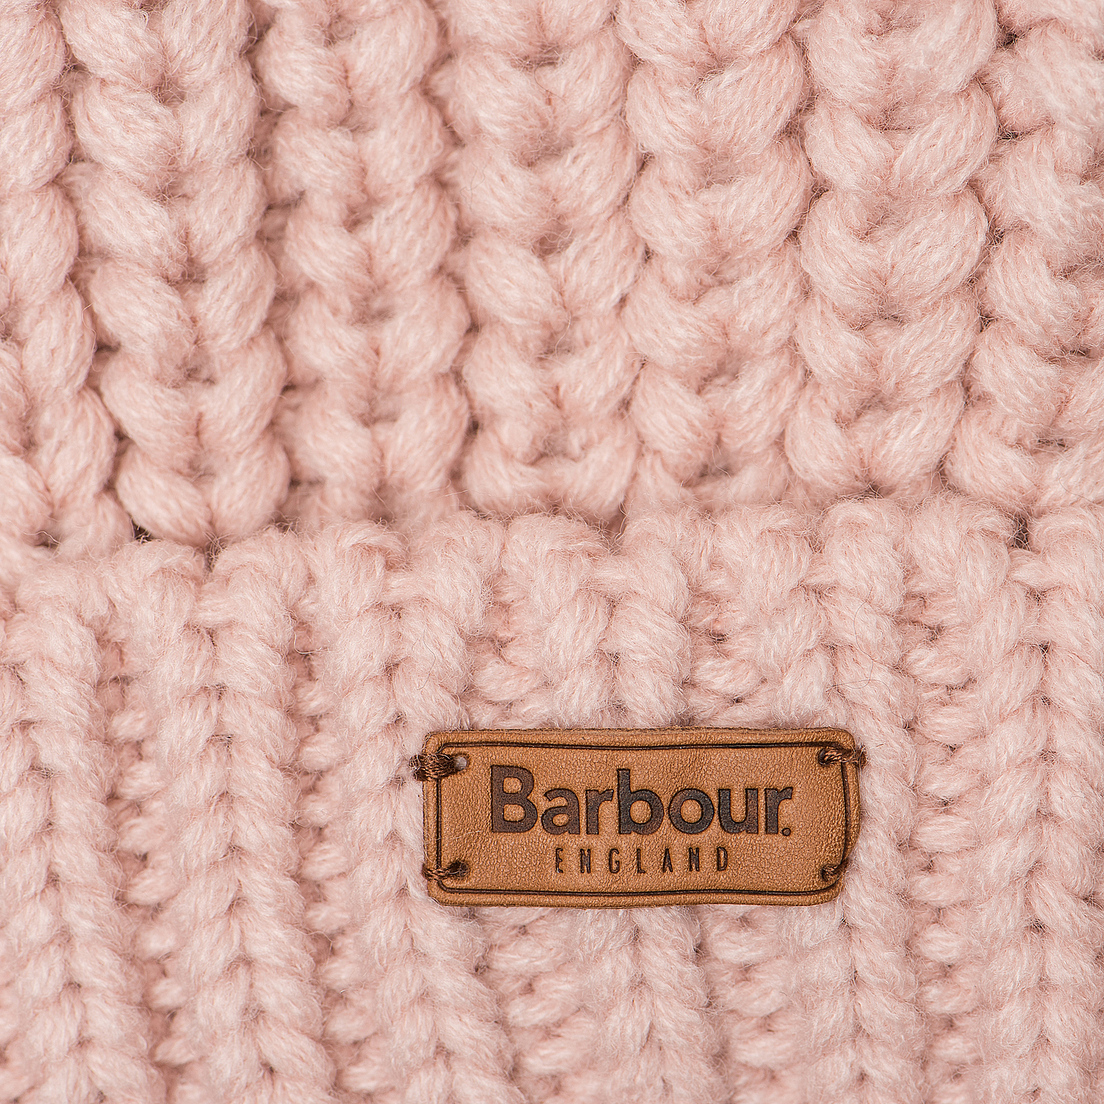 barbour saltburn beanie pink